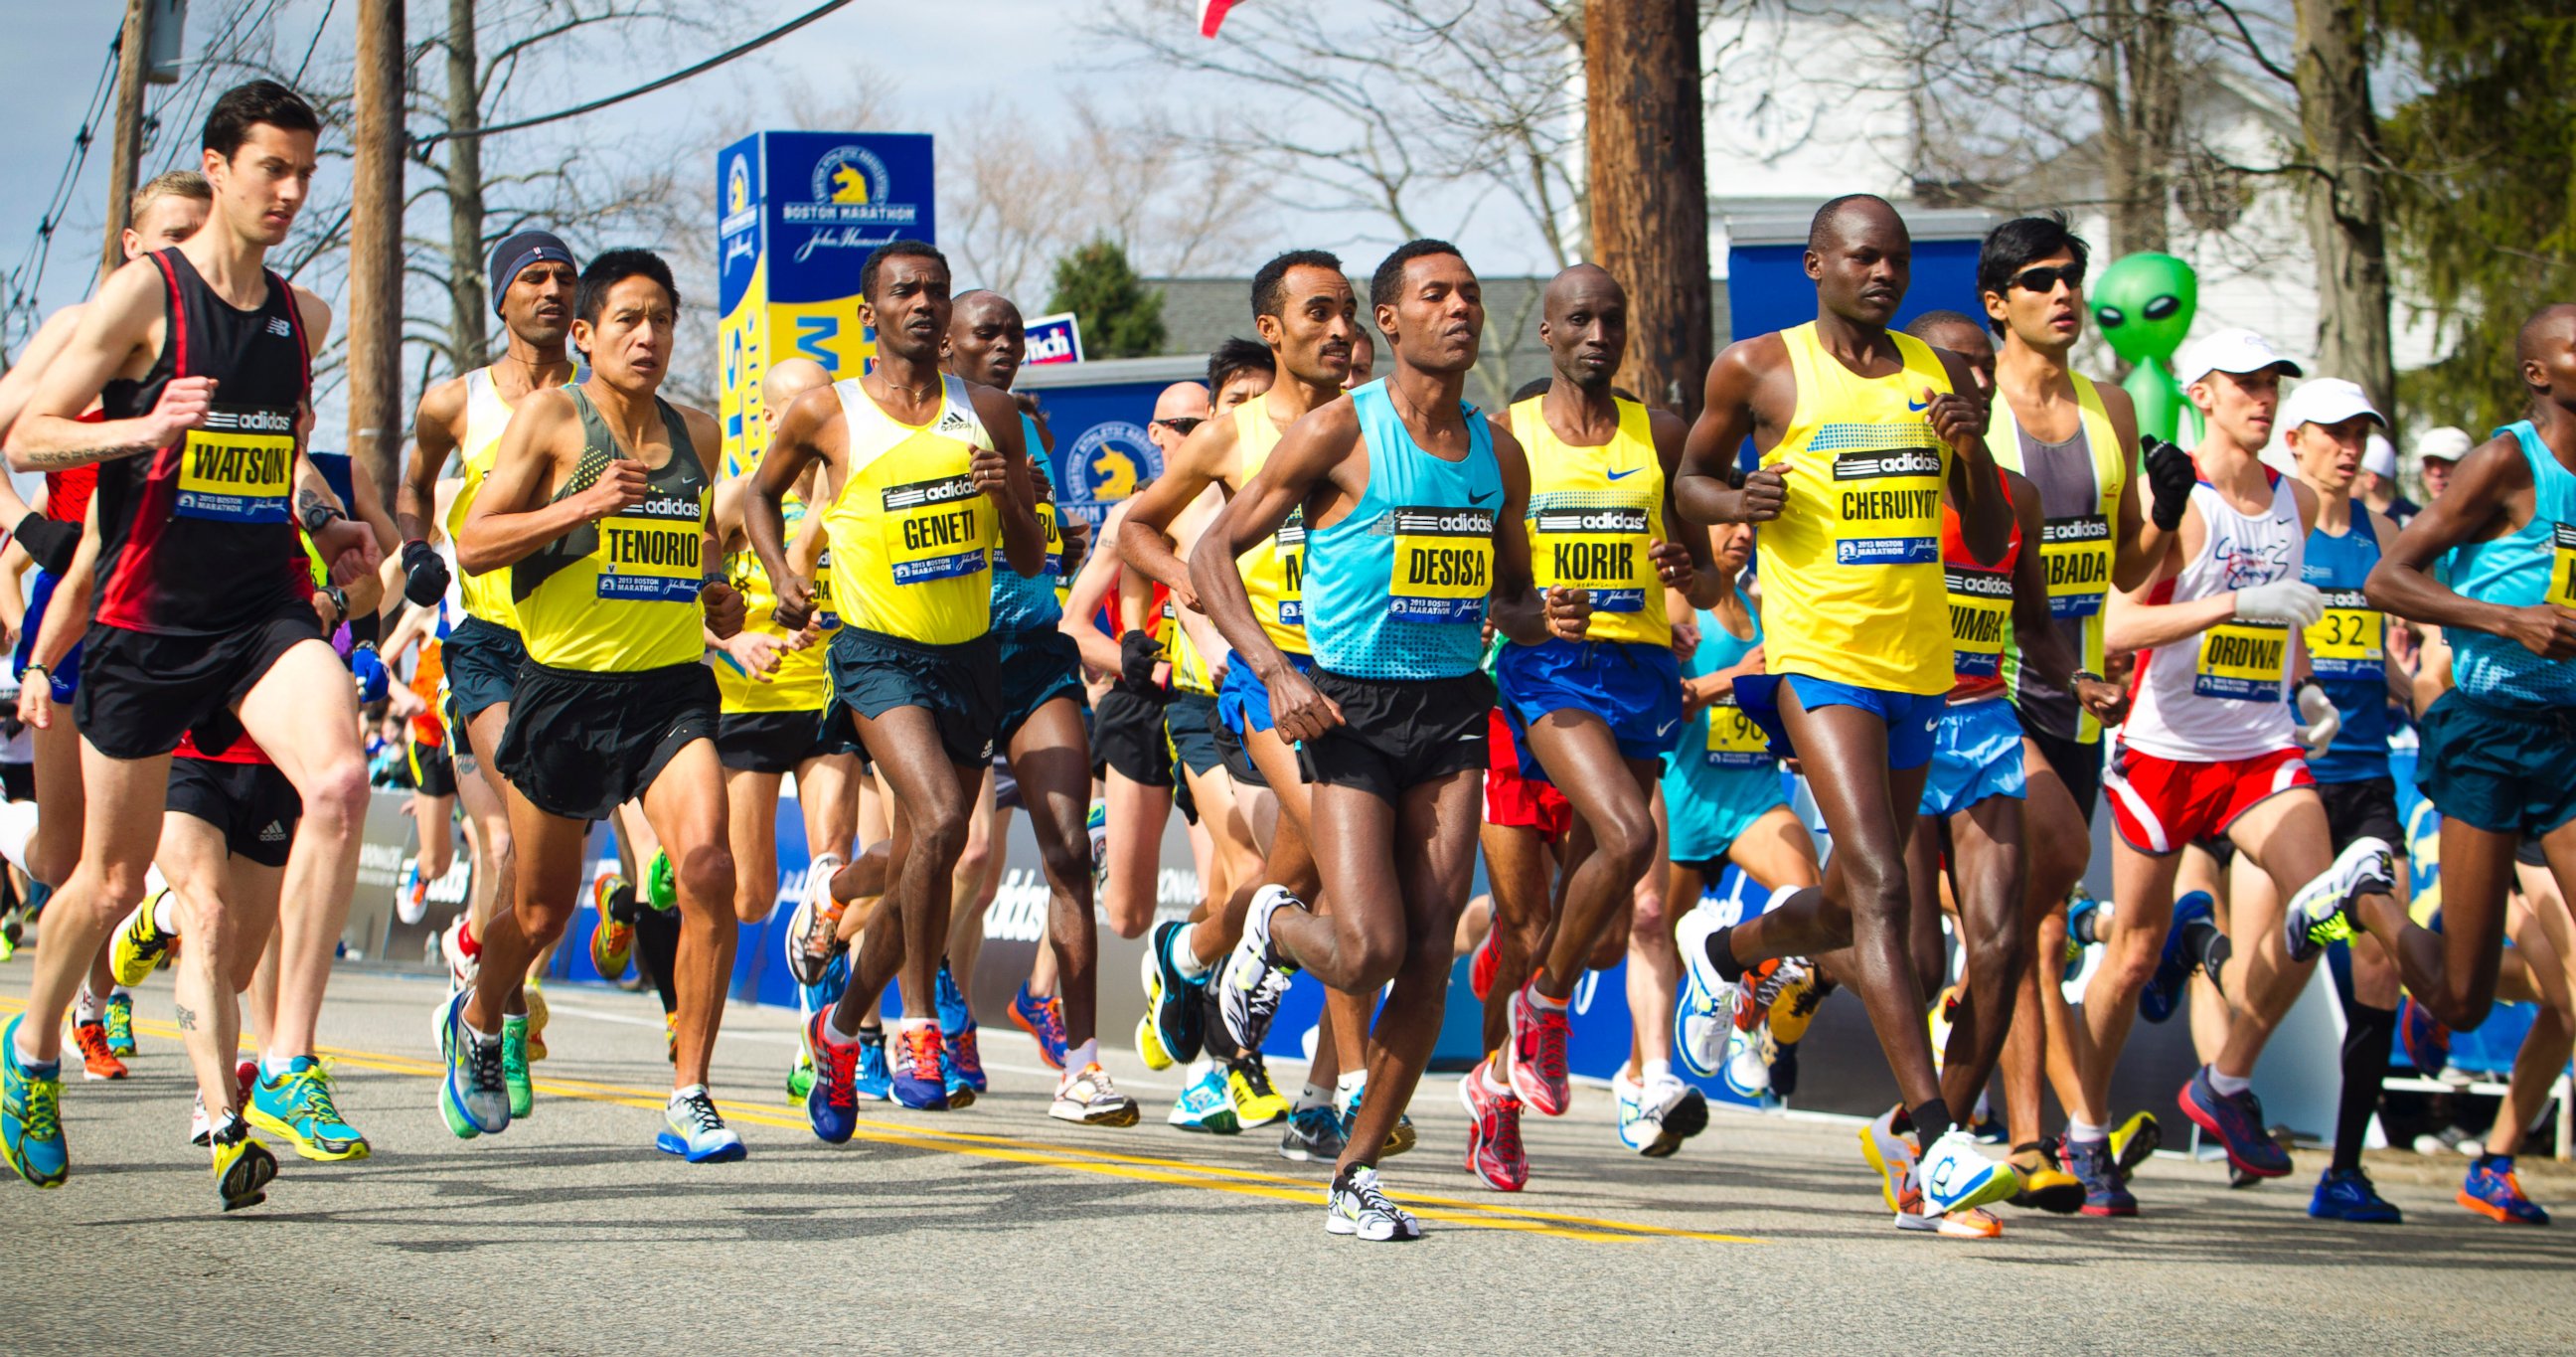 PHOTO: The elite men's race start of the 117th Boston Marathon kicked off in Hopkinton, Mass., April 15, 2013.